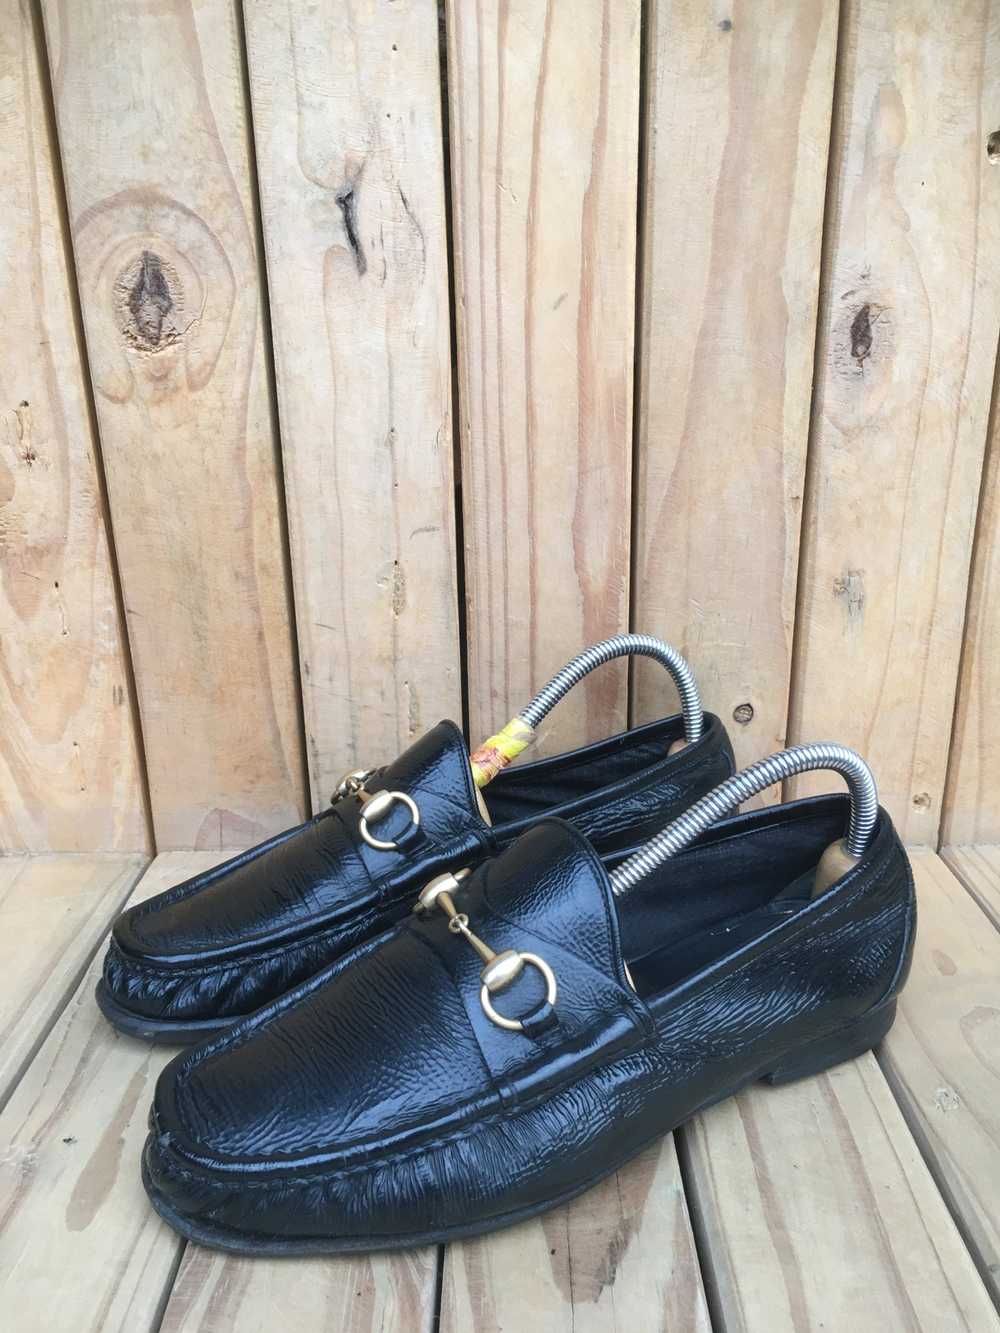 Gucci 1953 Gucci Horsebit Black Classic Loafers Size … - Gem